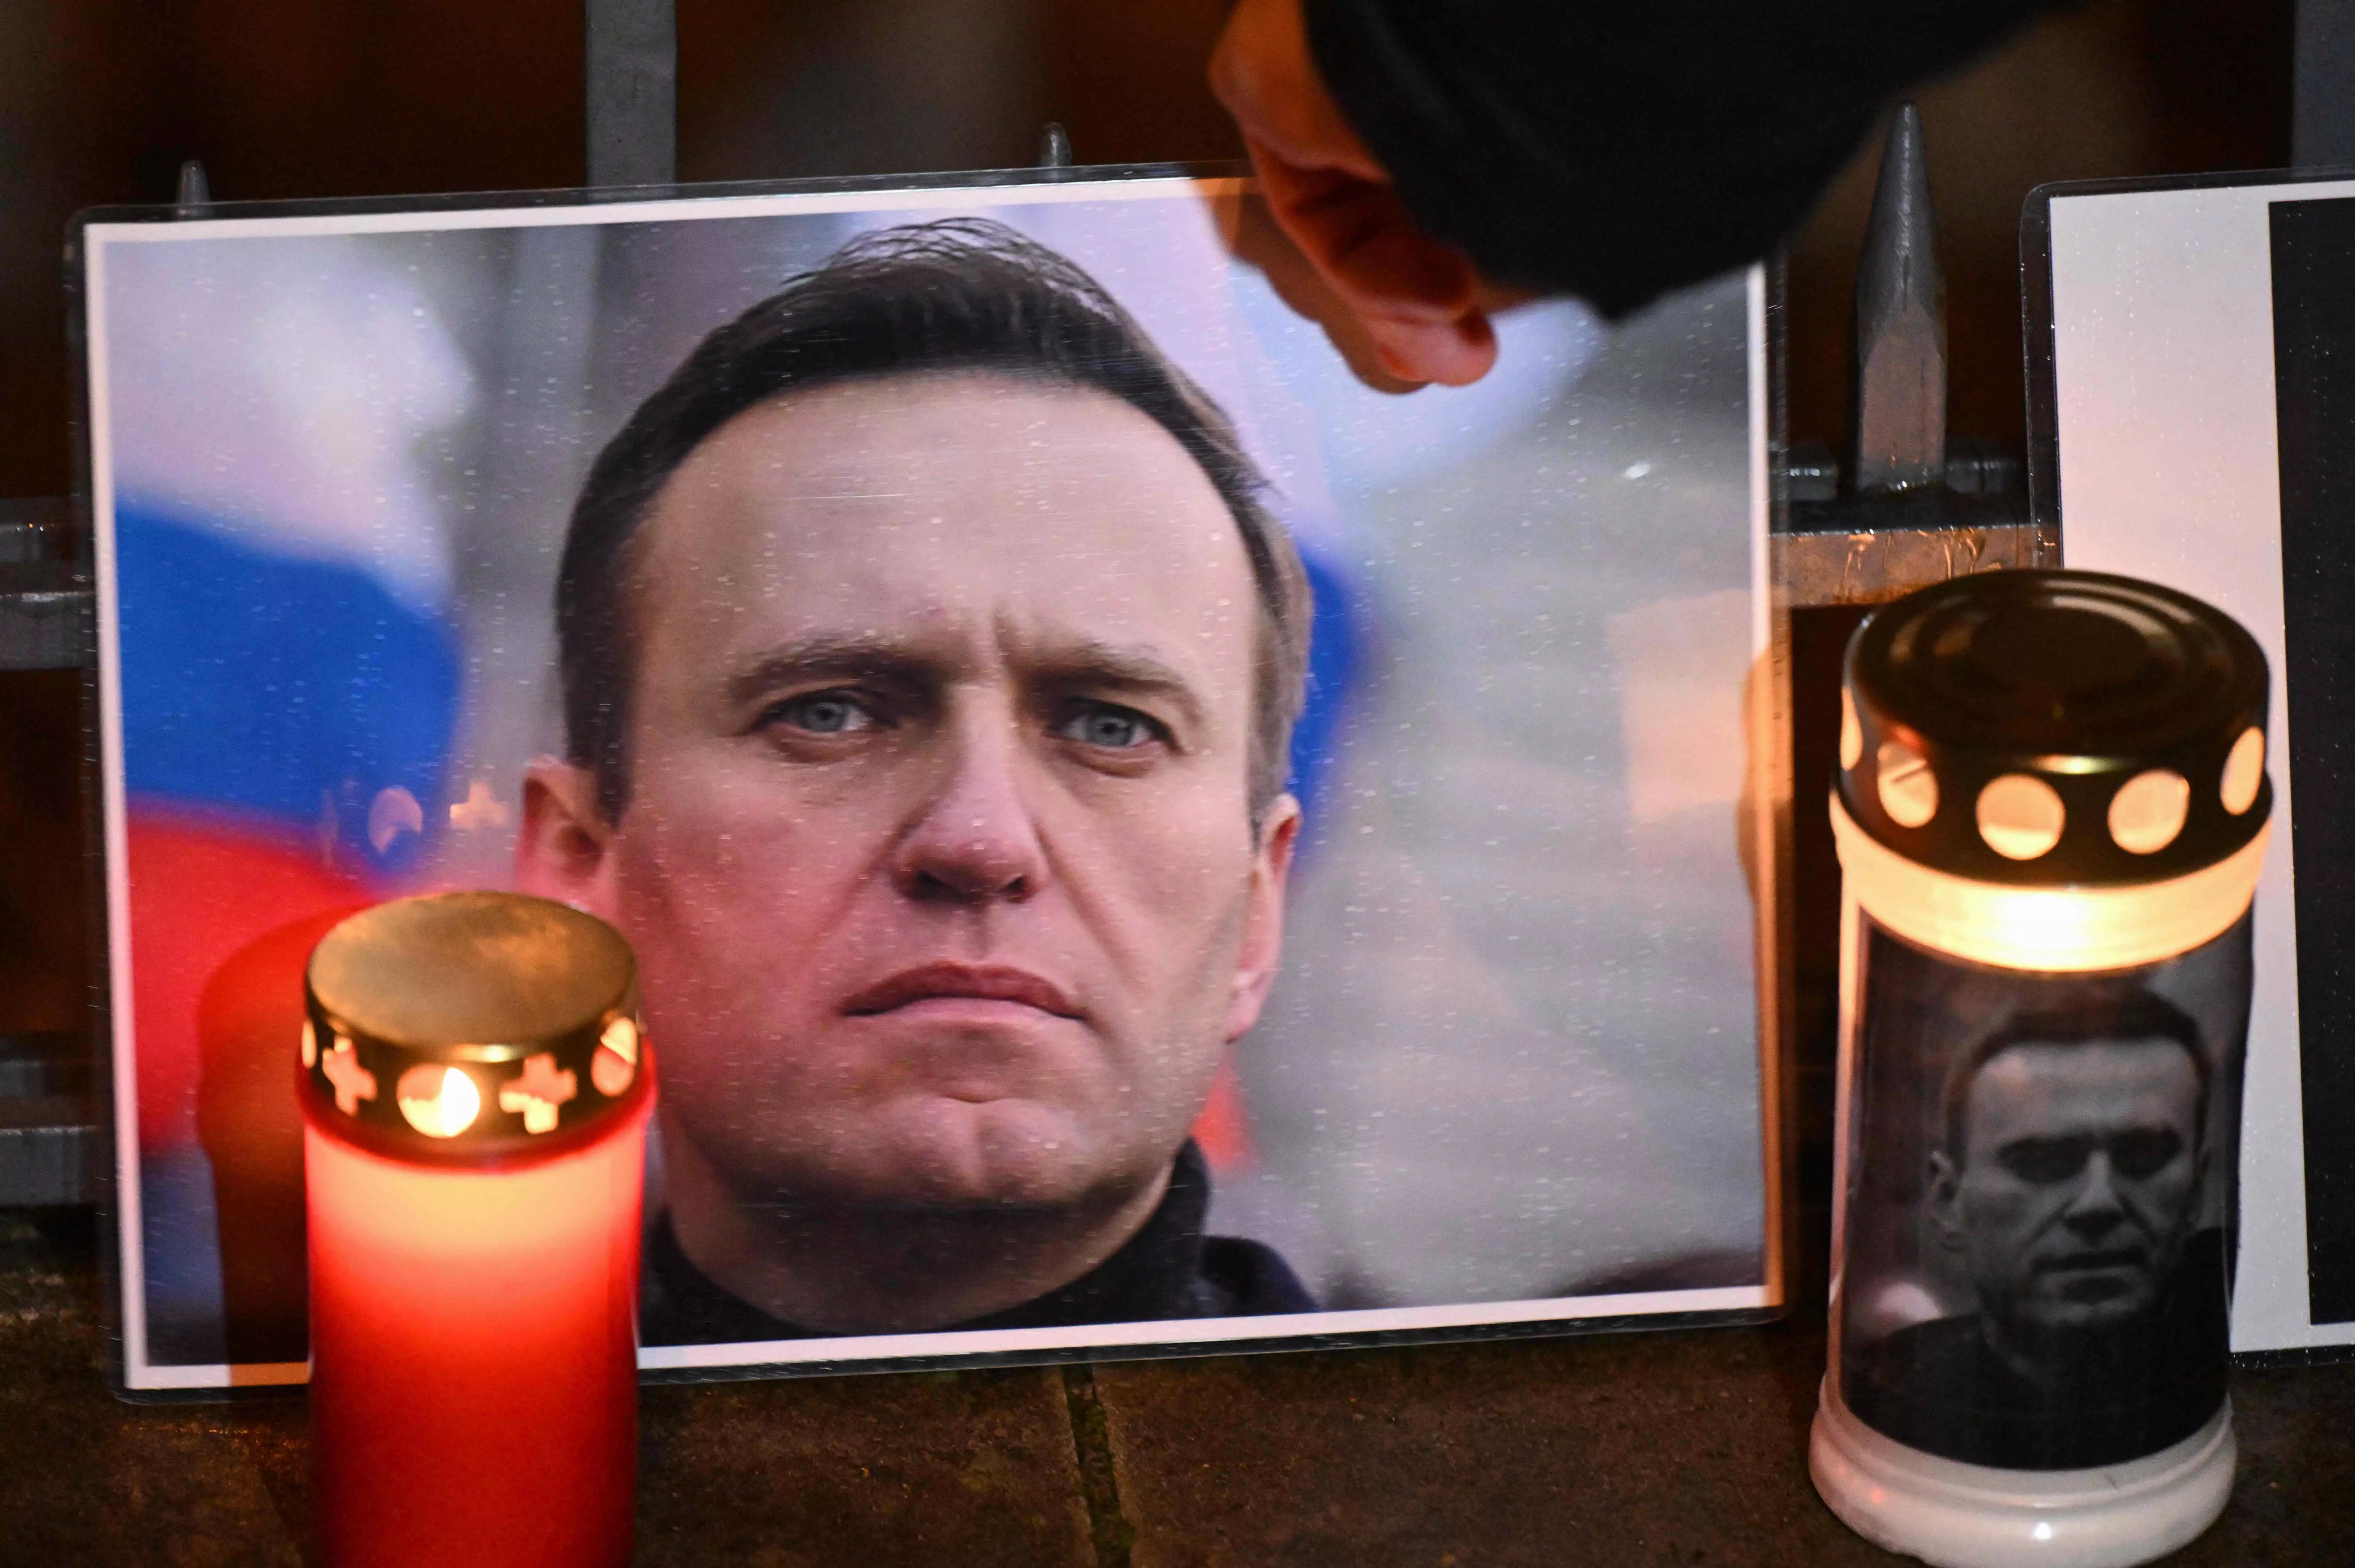 Putin ignores Western criticism over death of Alexei Navalny